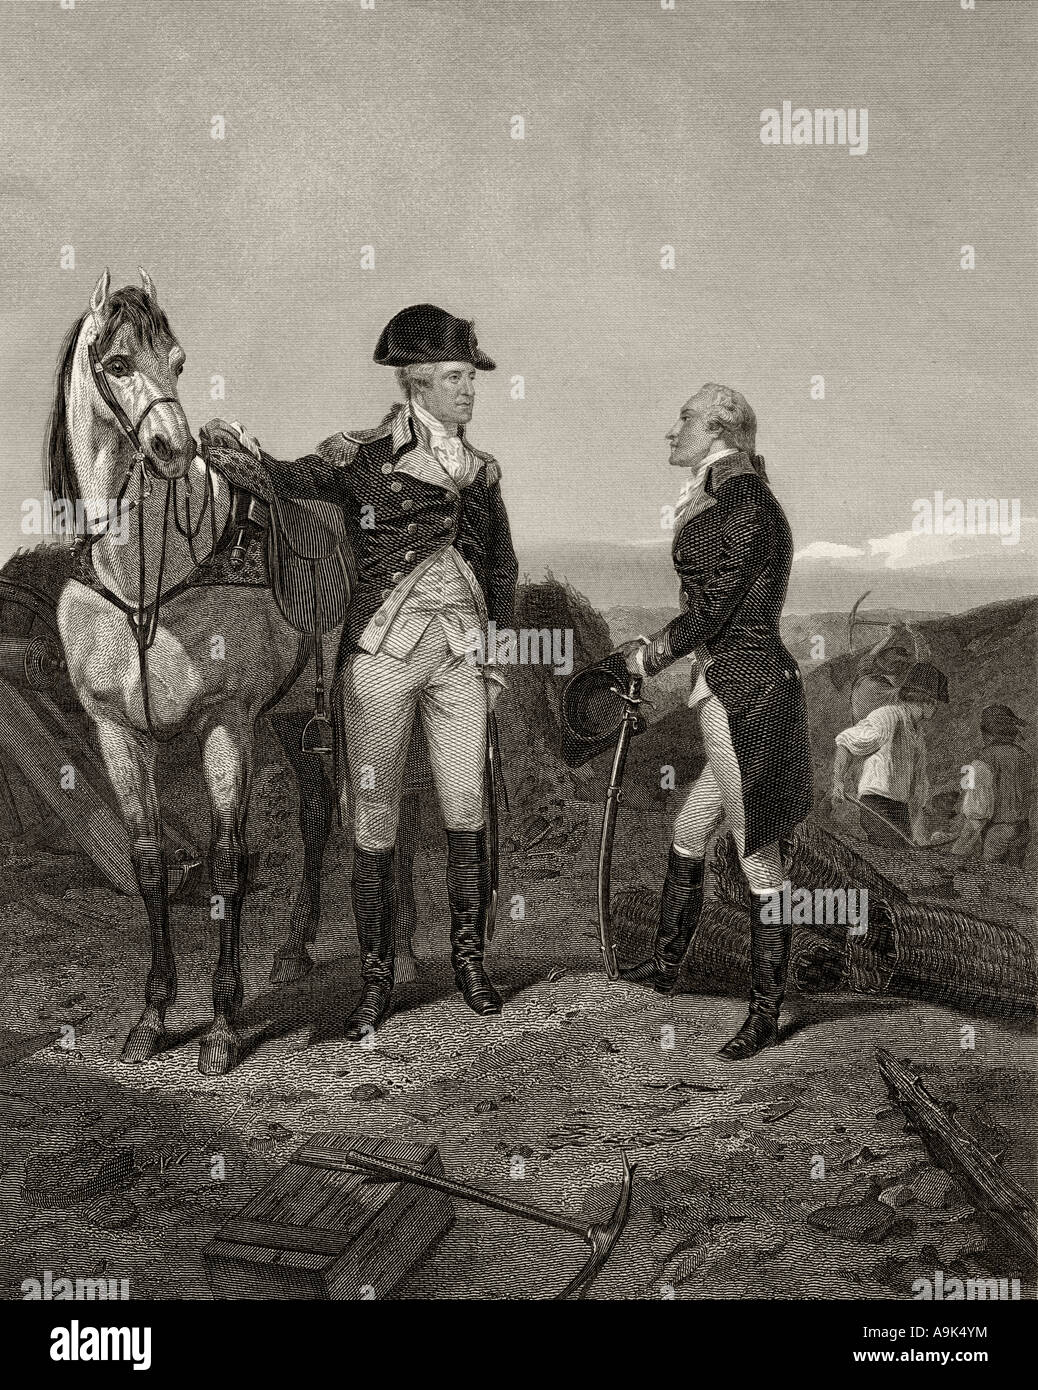 First meeting of George Washington 1732 - 1799, with Alexander Hamilton 1755 /1757 - 1804. Stock Photo